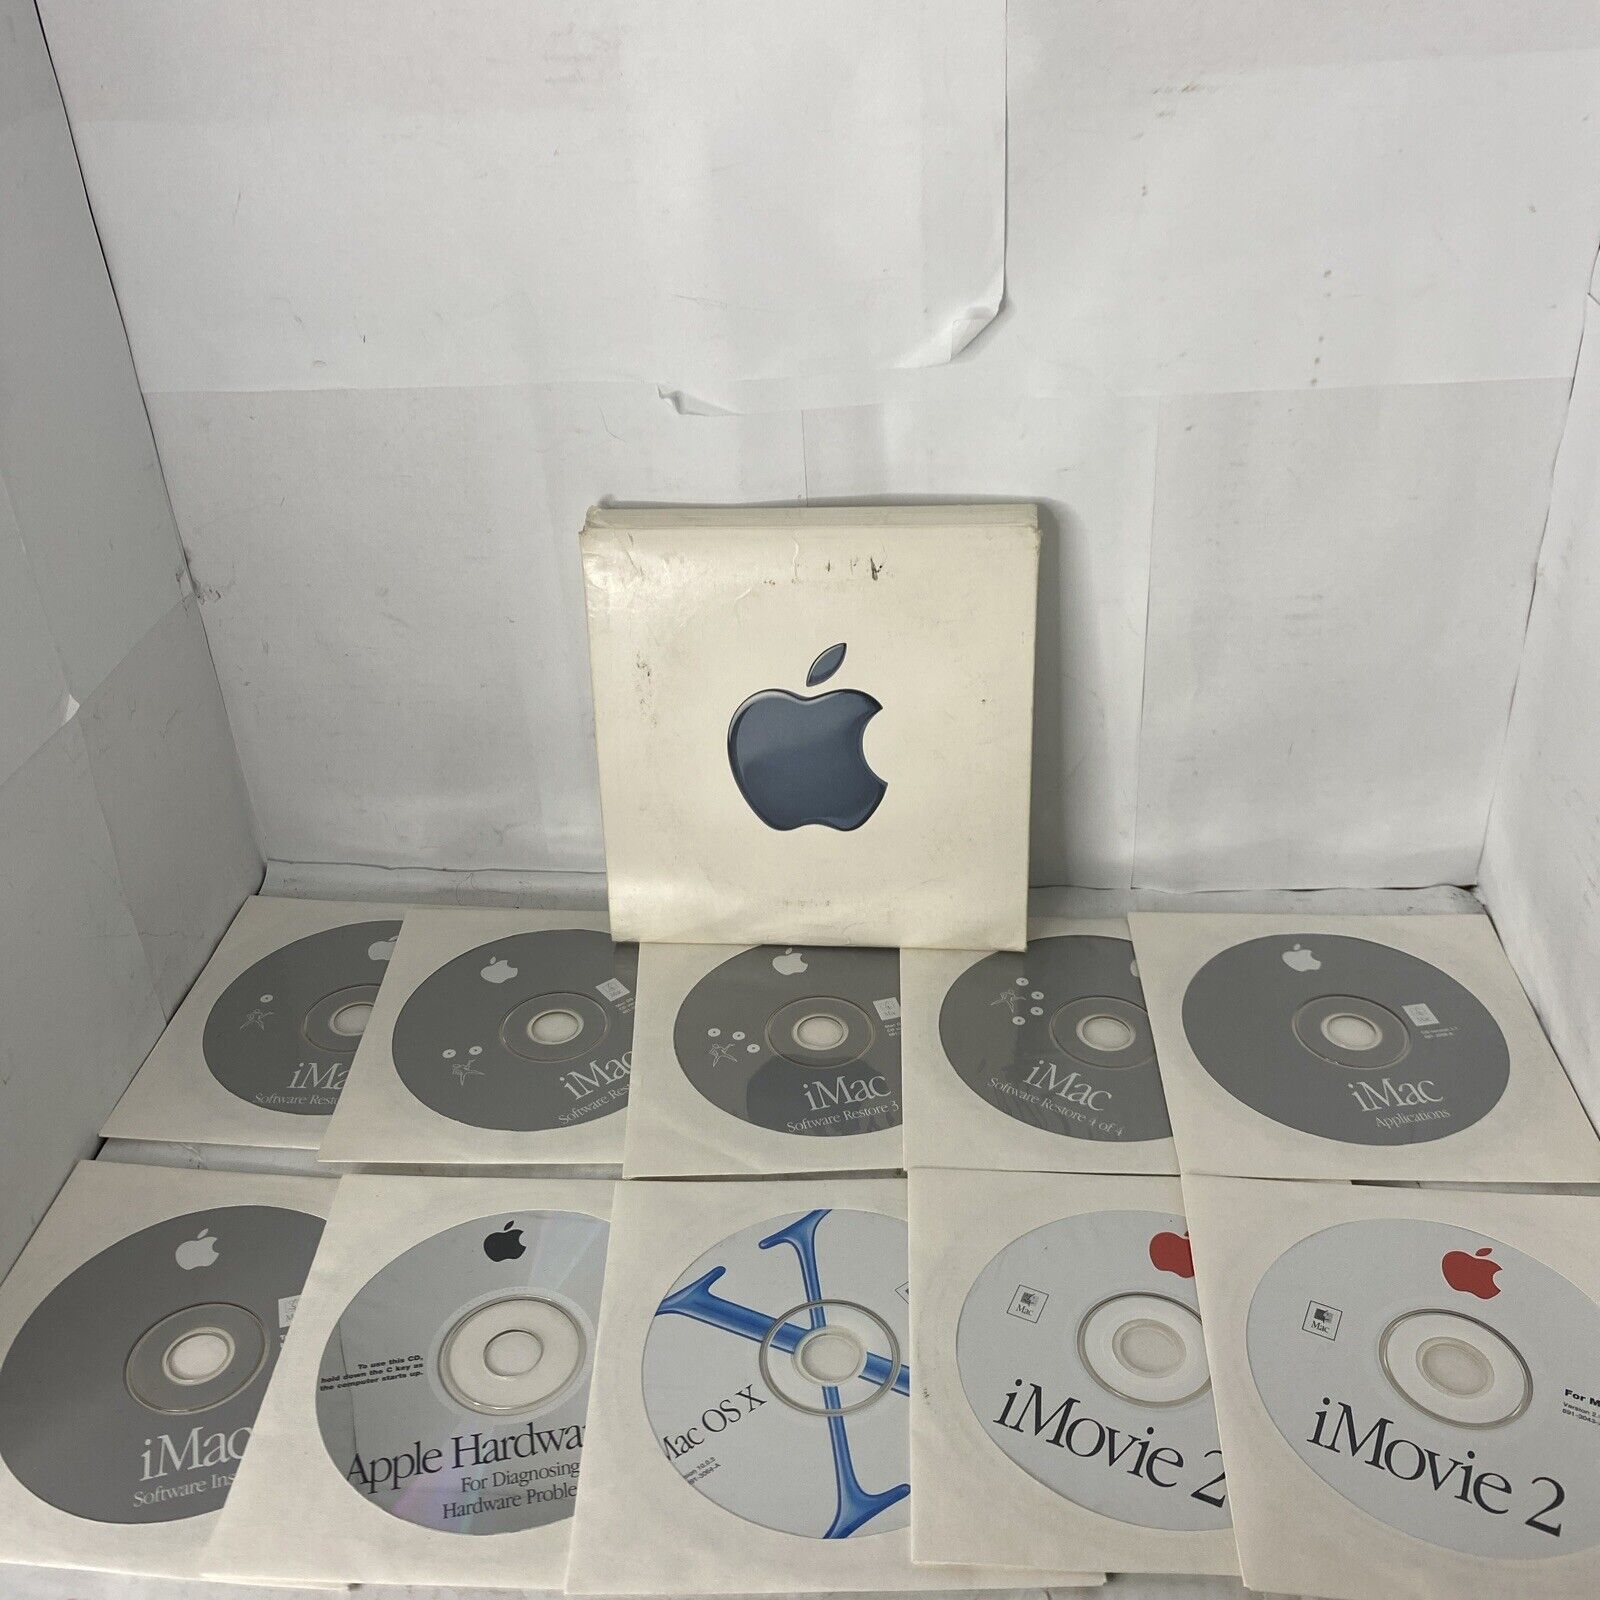 Apple iMac 10 CDs Bundle Software Restore CD\'s of OS 9.1, Mac OS X 10.0.3